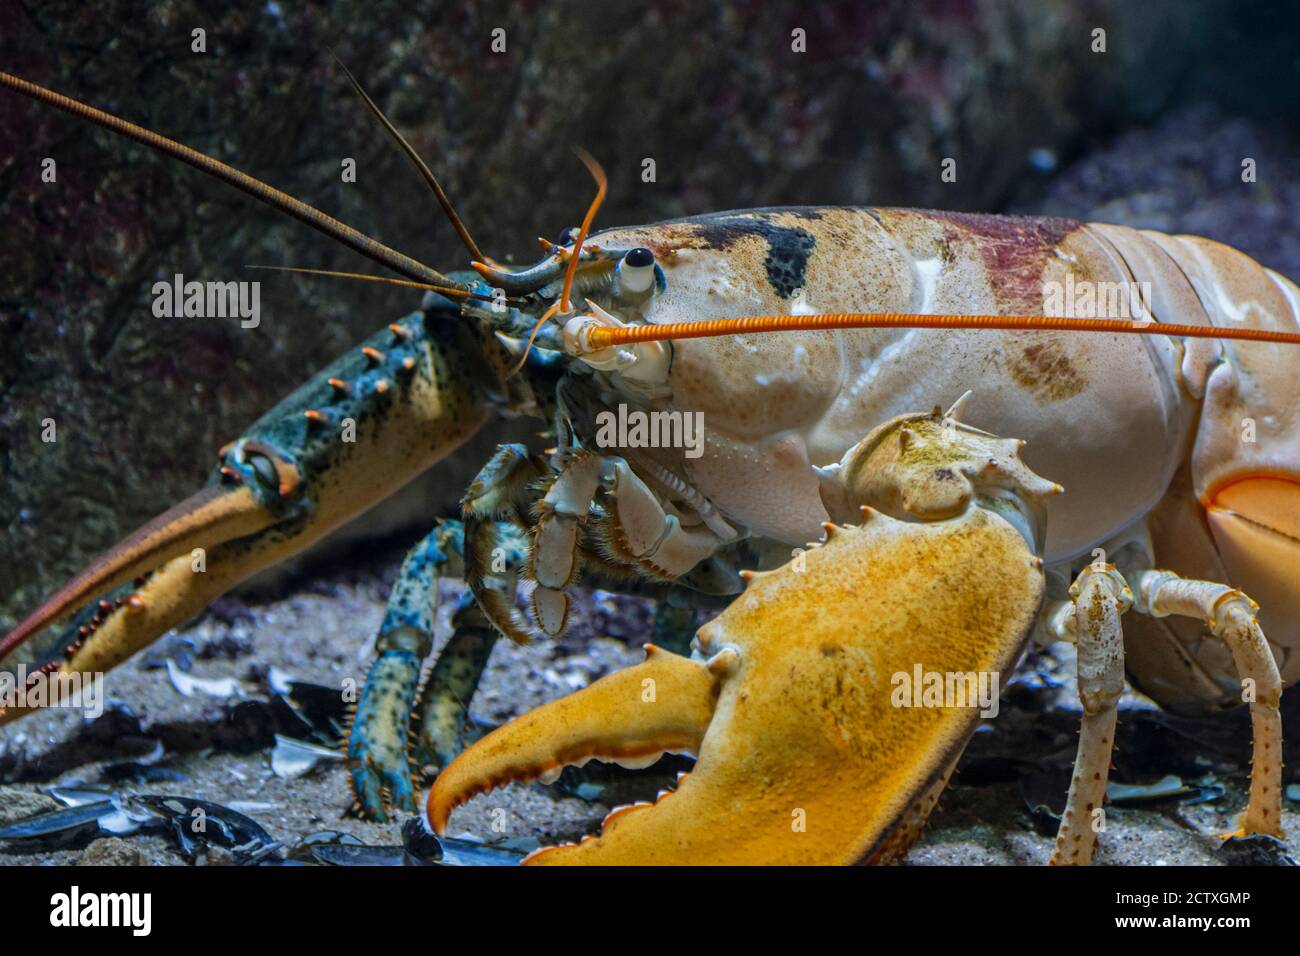 American lobster / Canadian lobster (Homarus americanus) underwater, crustacean found on the Atlantic coast of North America Stock Photo